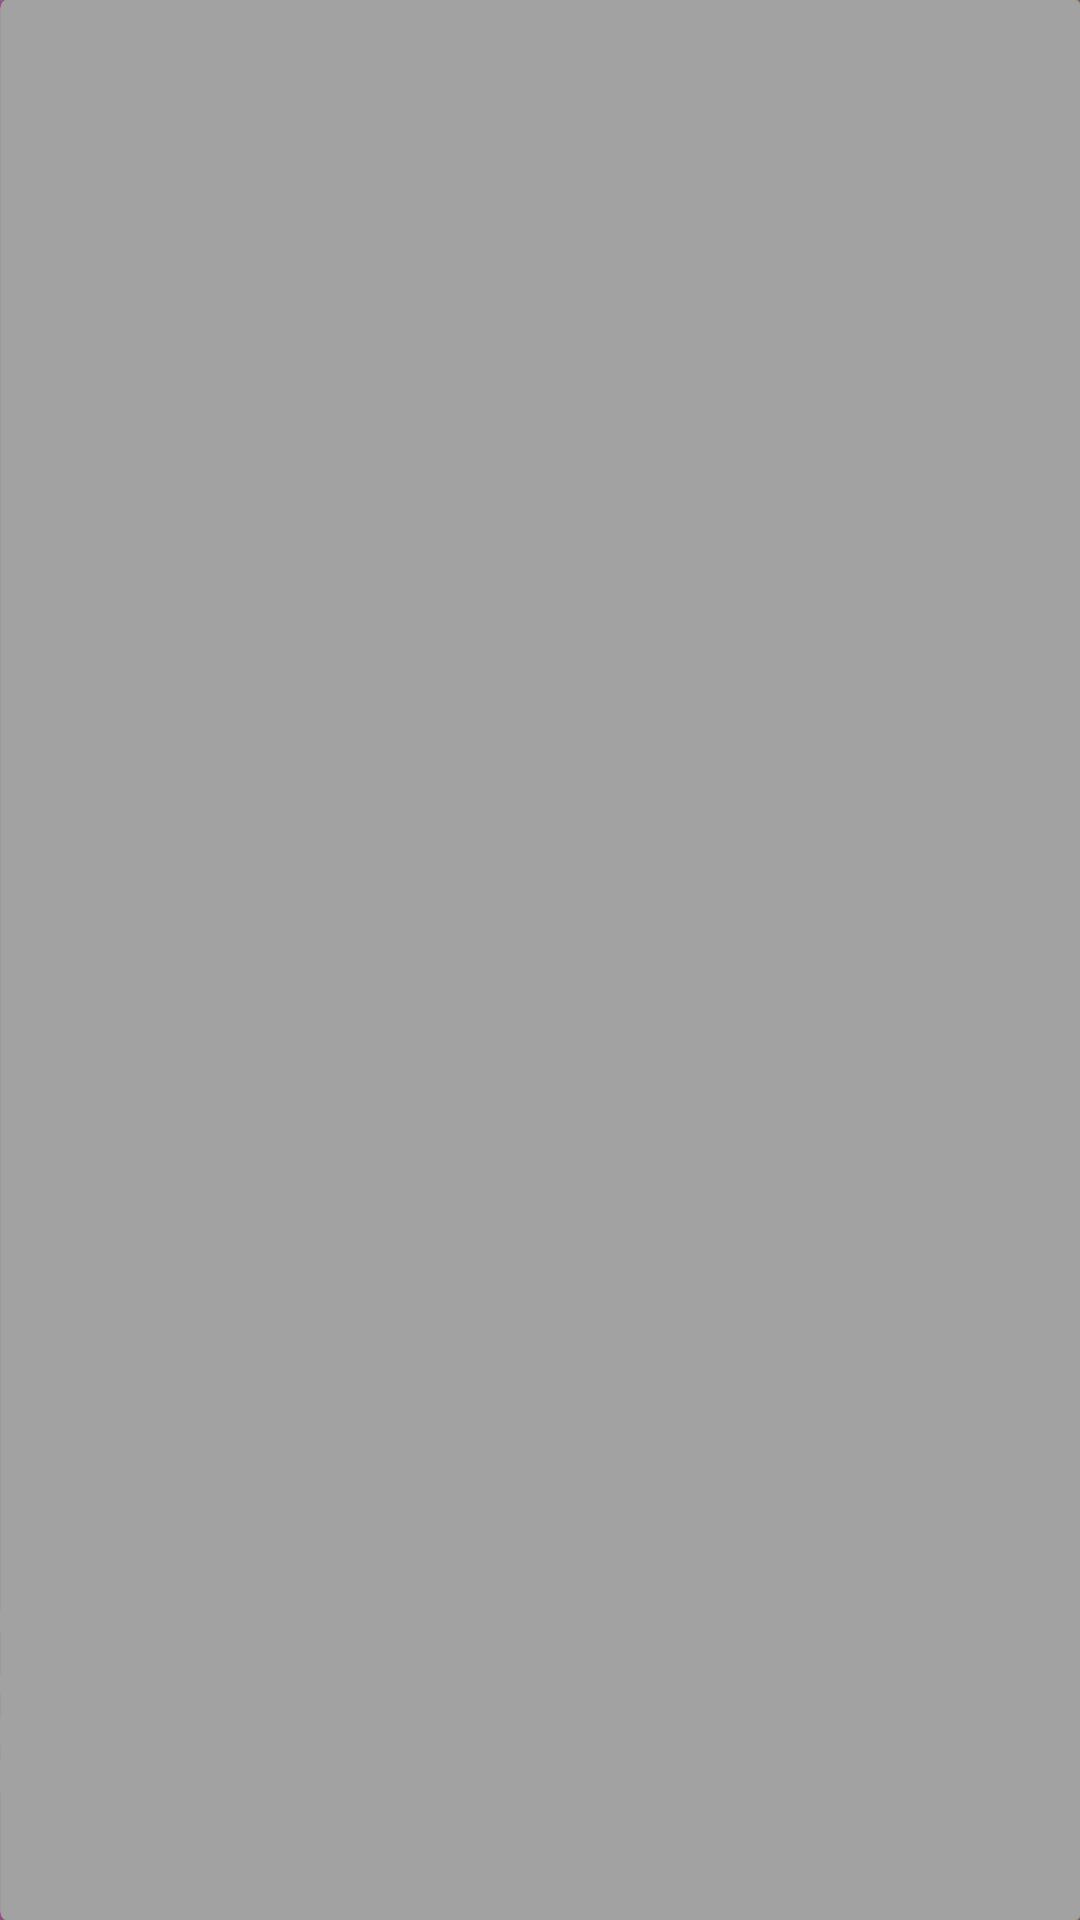 Solid Plain Grey Wallpaper iPhone